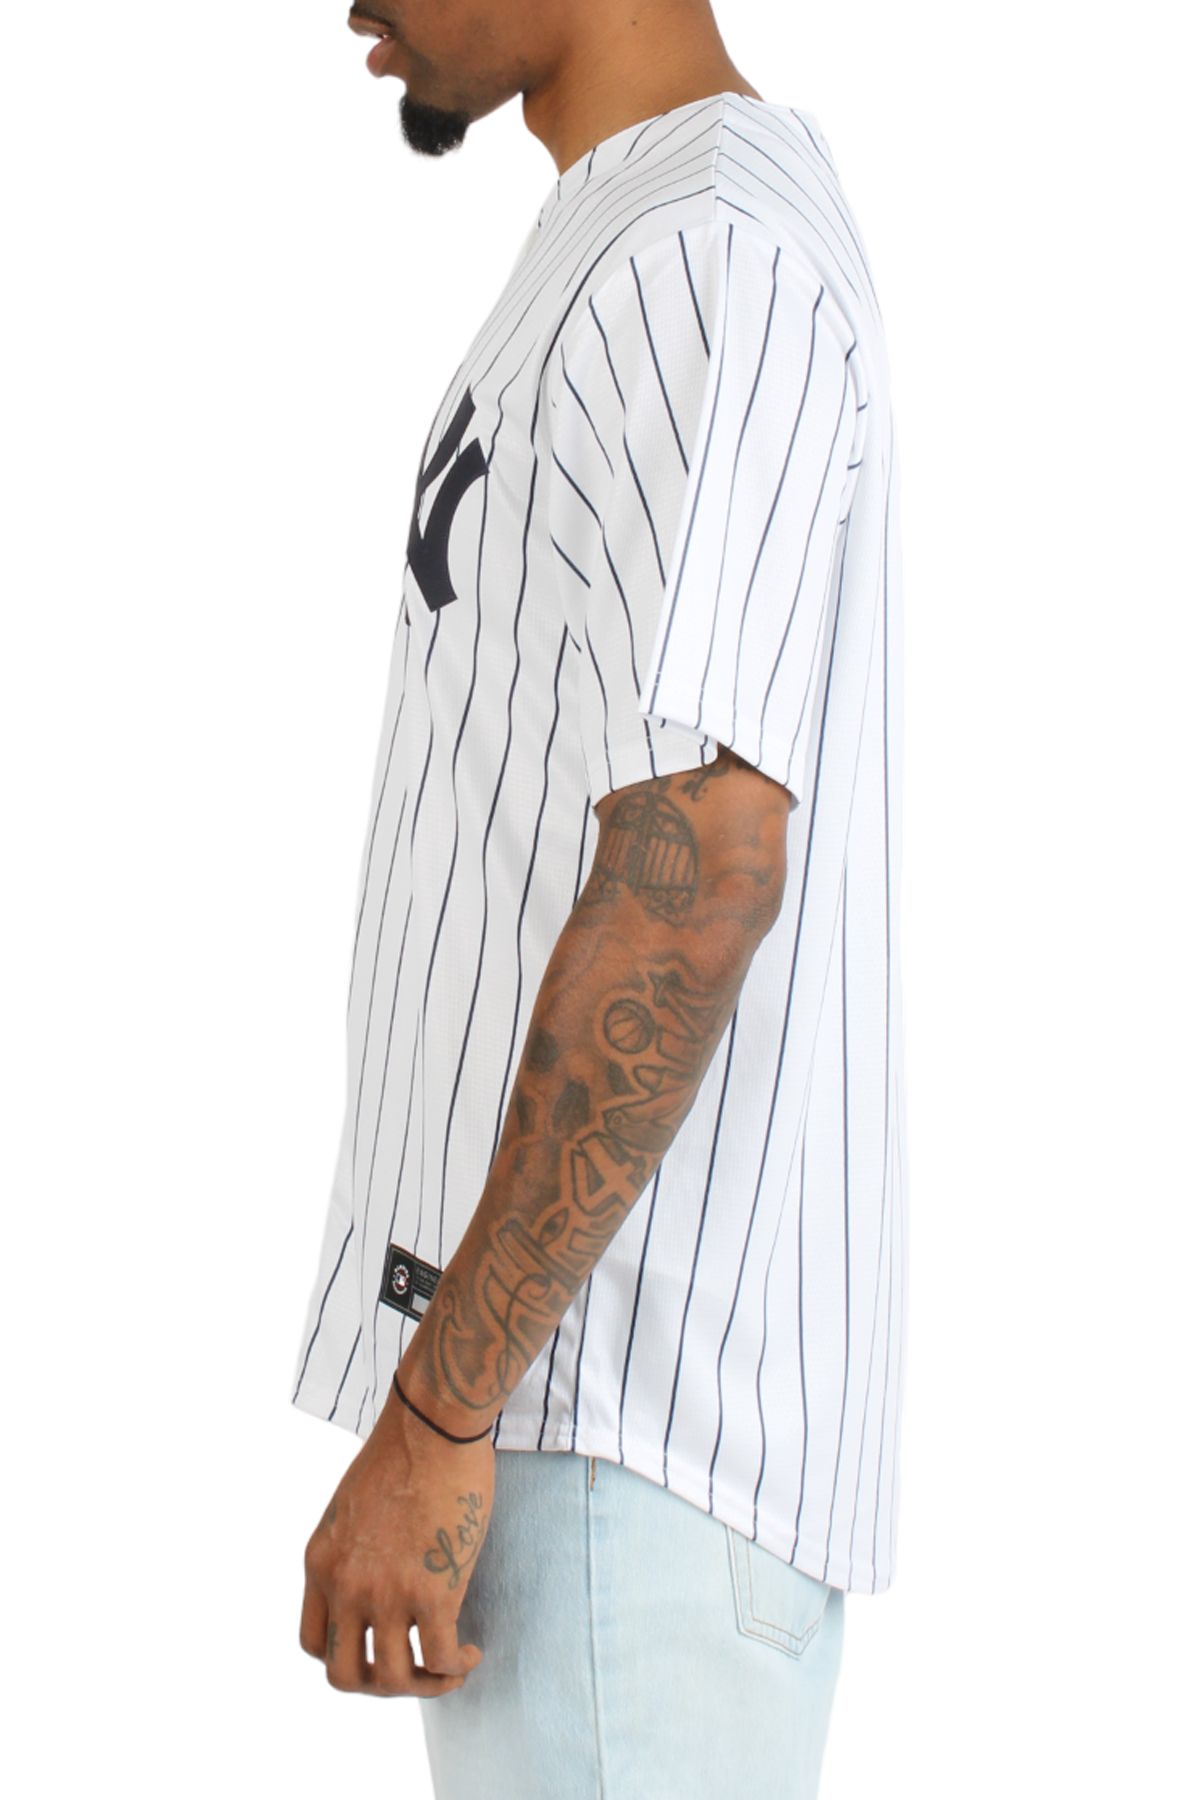 Nike New York Yankees MLB Men's Replica Baseball Shirt White T770